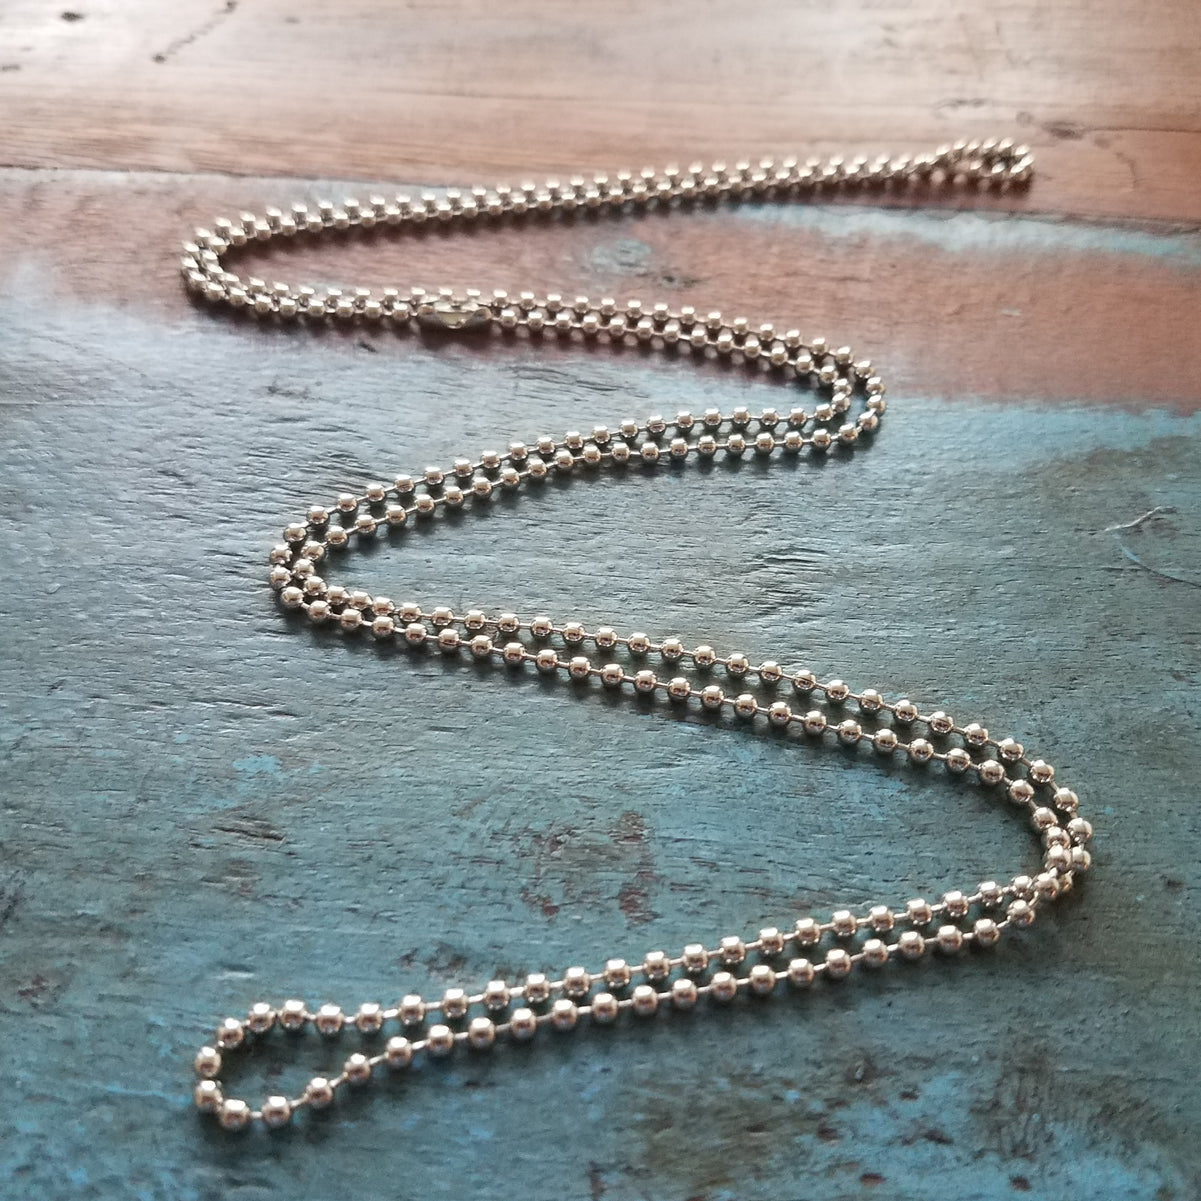 Nickel-Plated Steel Beaded Neck Chain, Length 30" (762mm) (P/N 2125-1500)